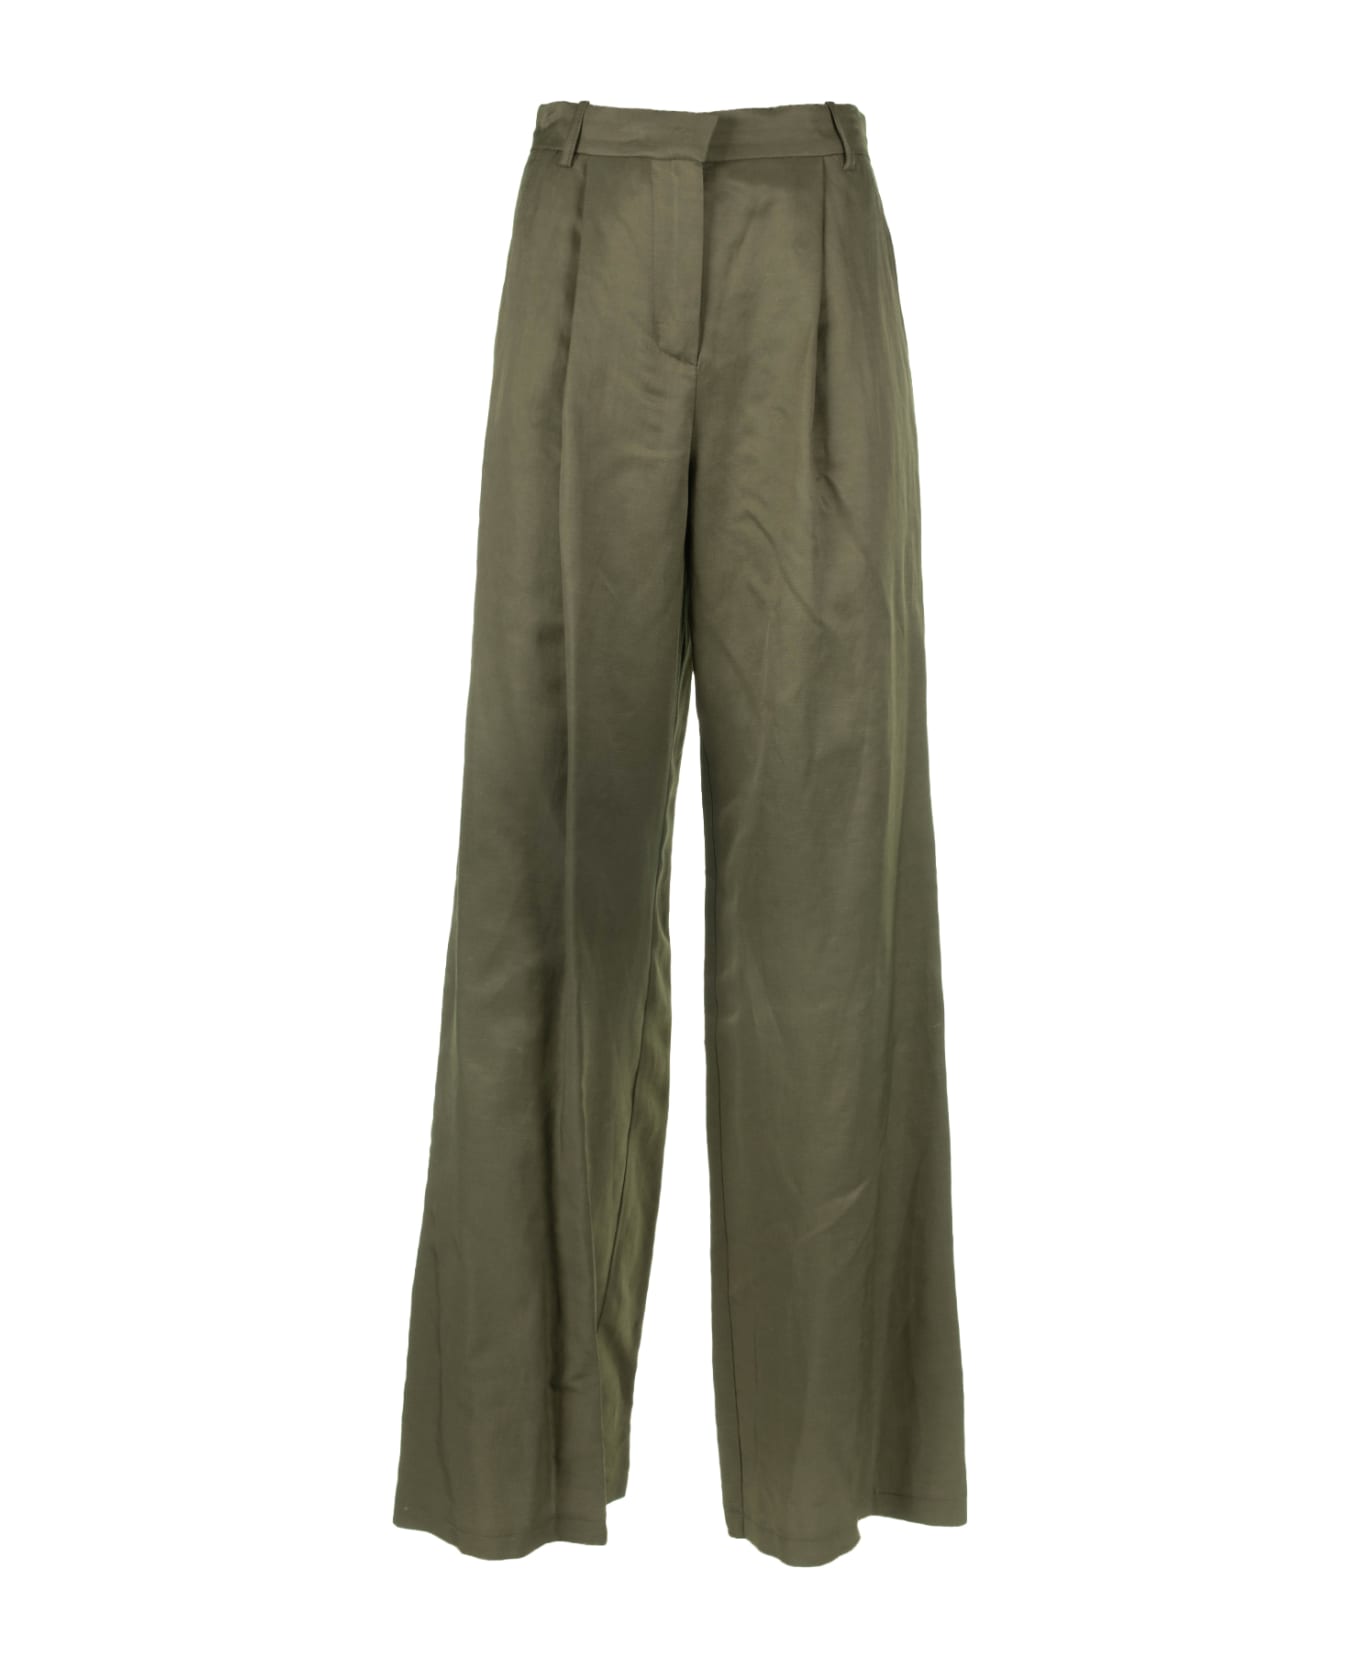 Kaos Military Green High-waisted Wide Leg Trousers - MILITARE